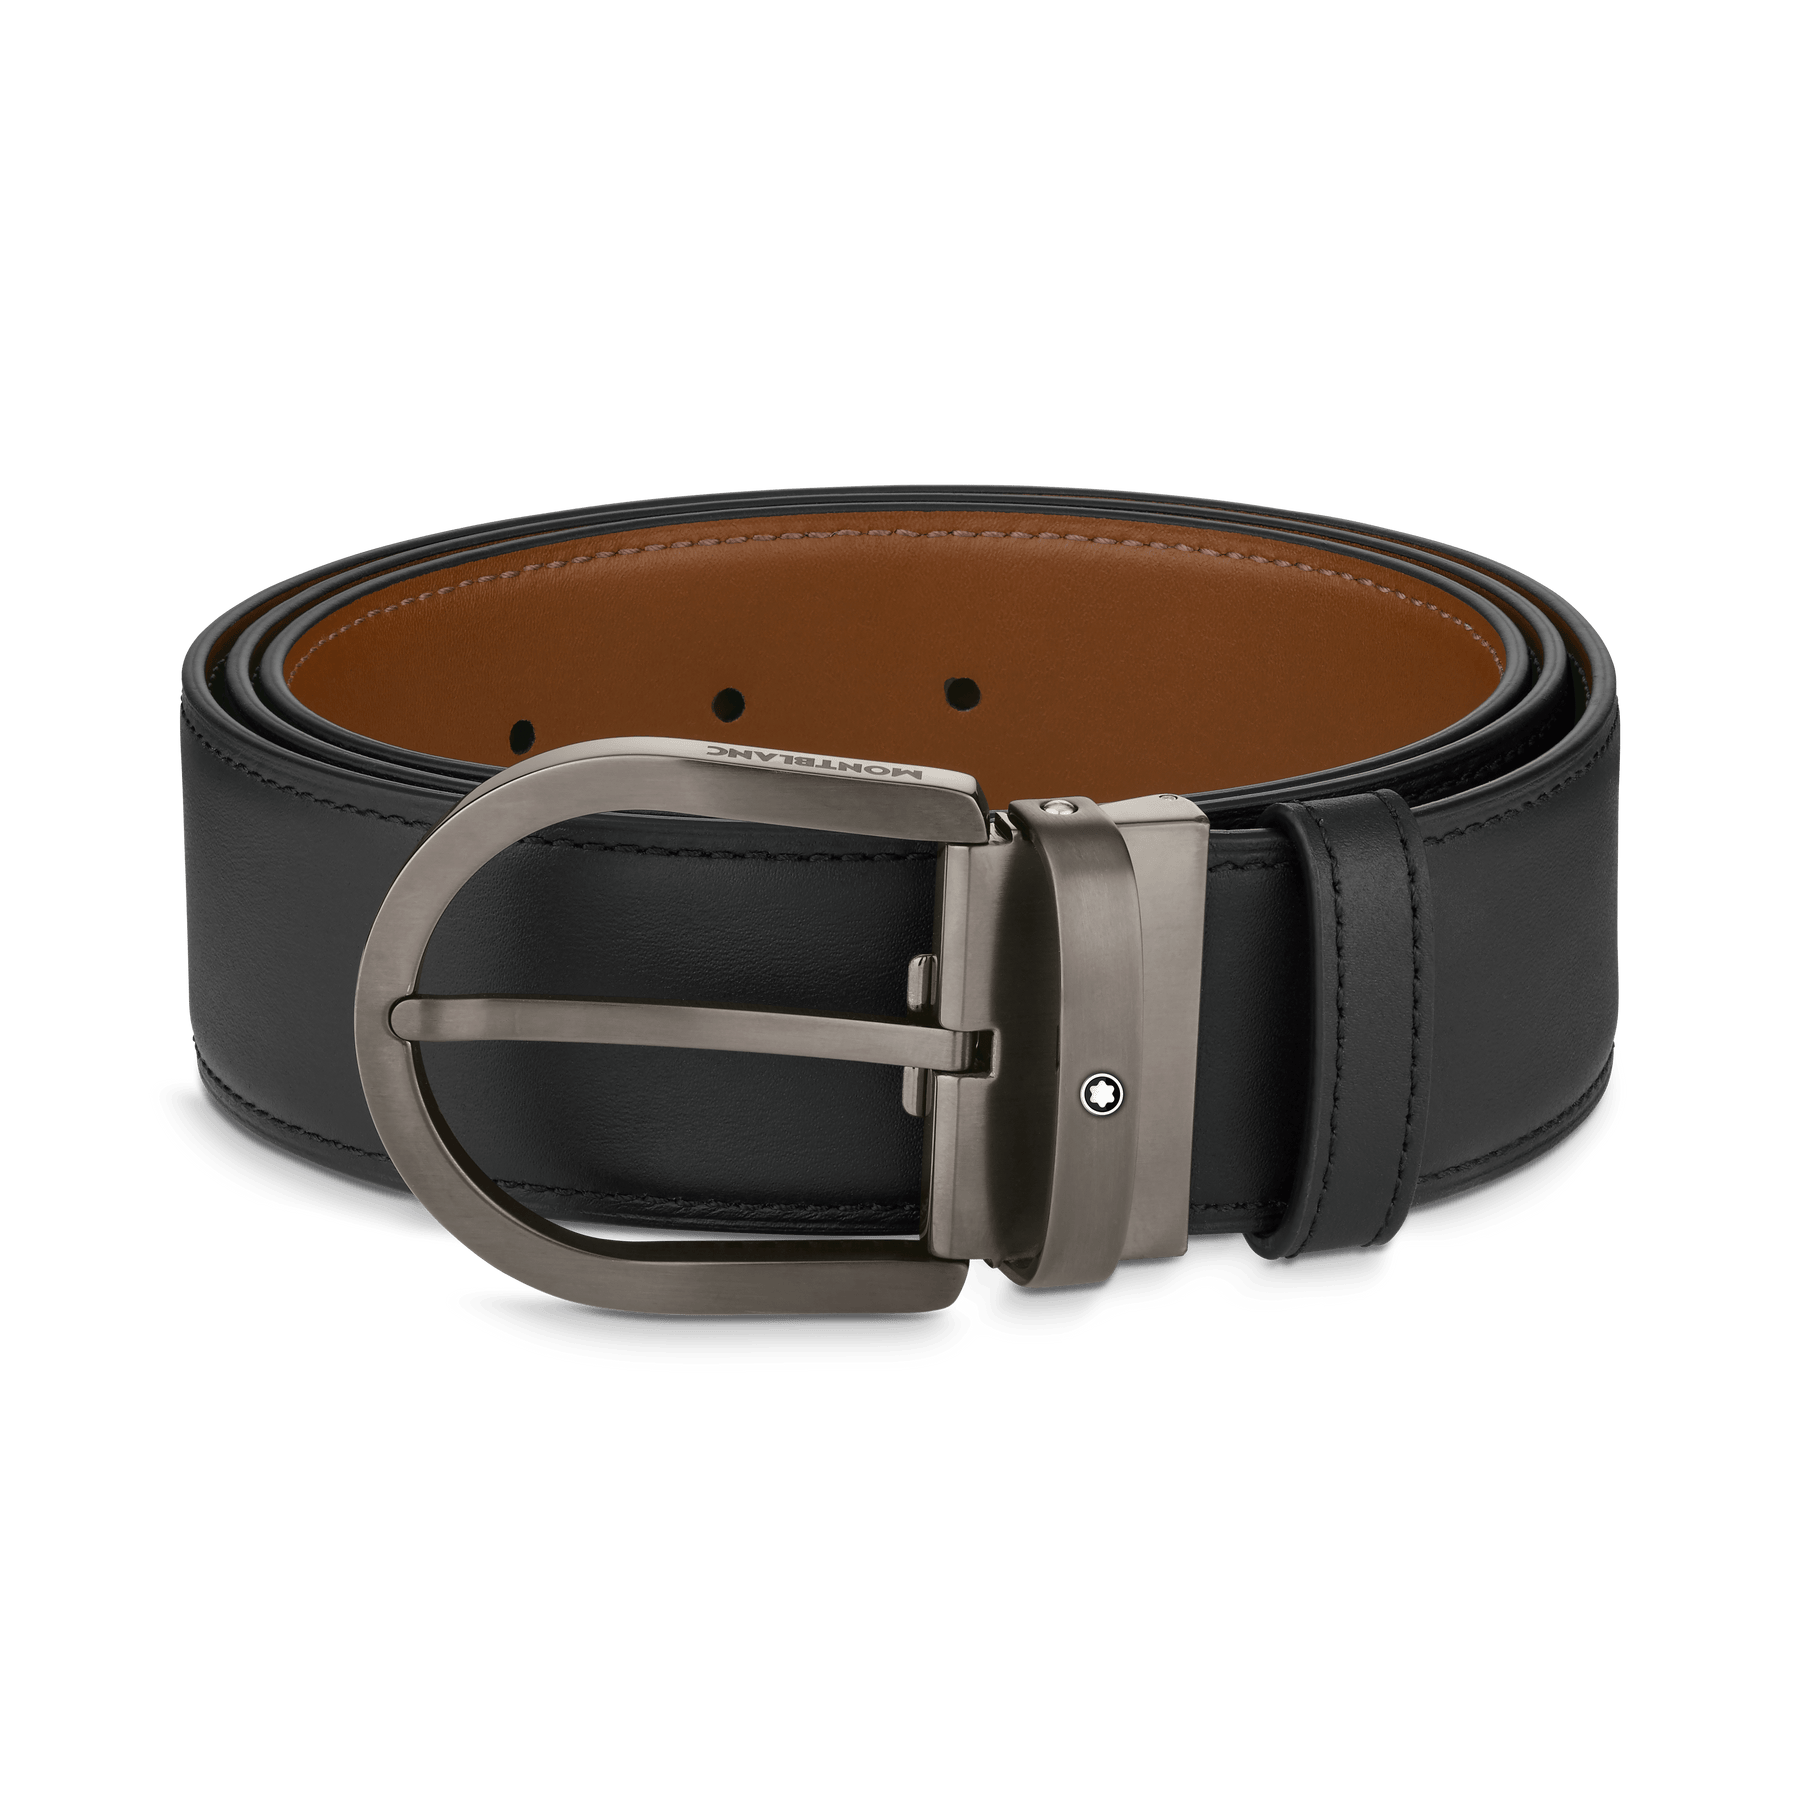 Horseshoe buckle black/brown 40 mm reversible leather belt